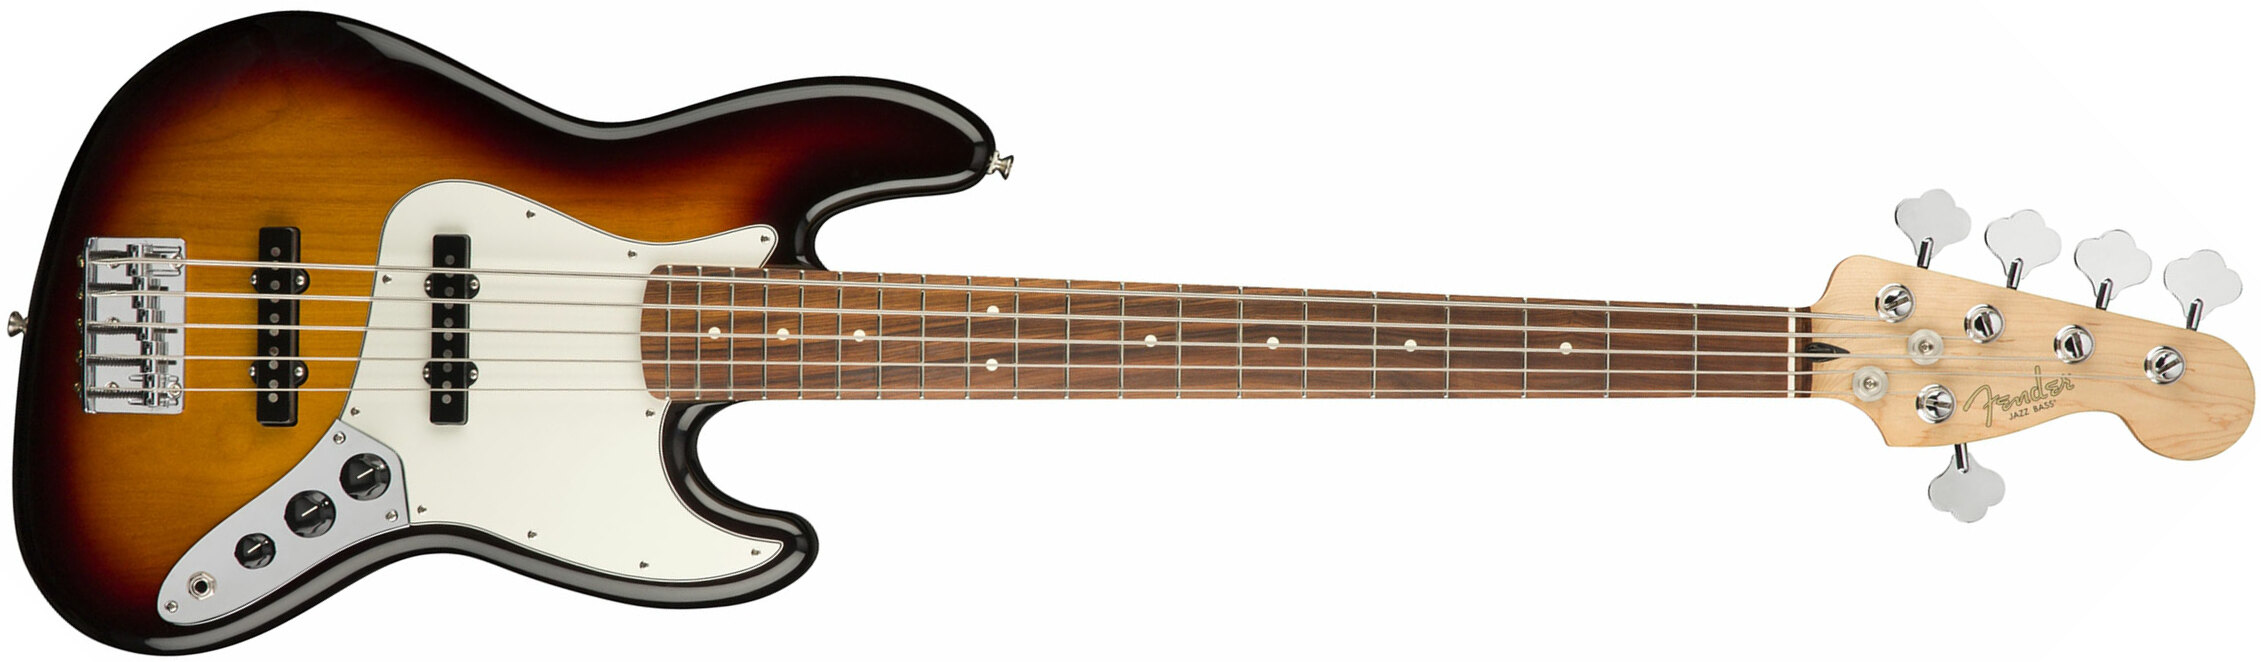 Fender Jazz Bass Player V 5-cordes Mex Pf - 3-color Sunburst - Solid body elektrische bas - Main picture